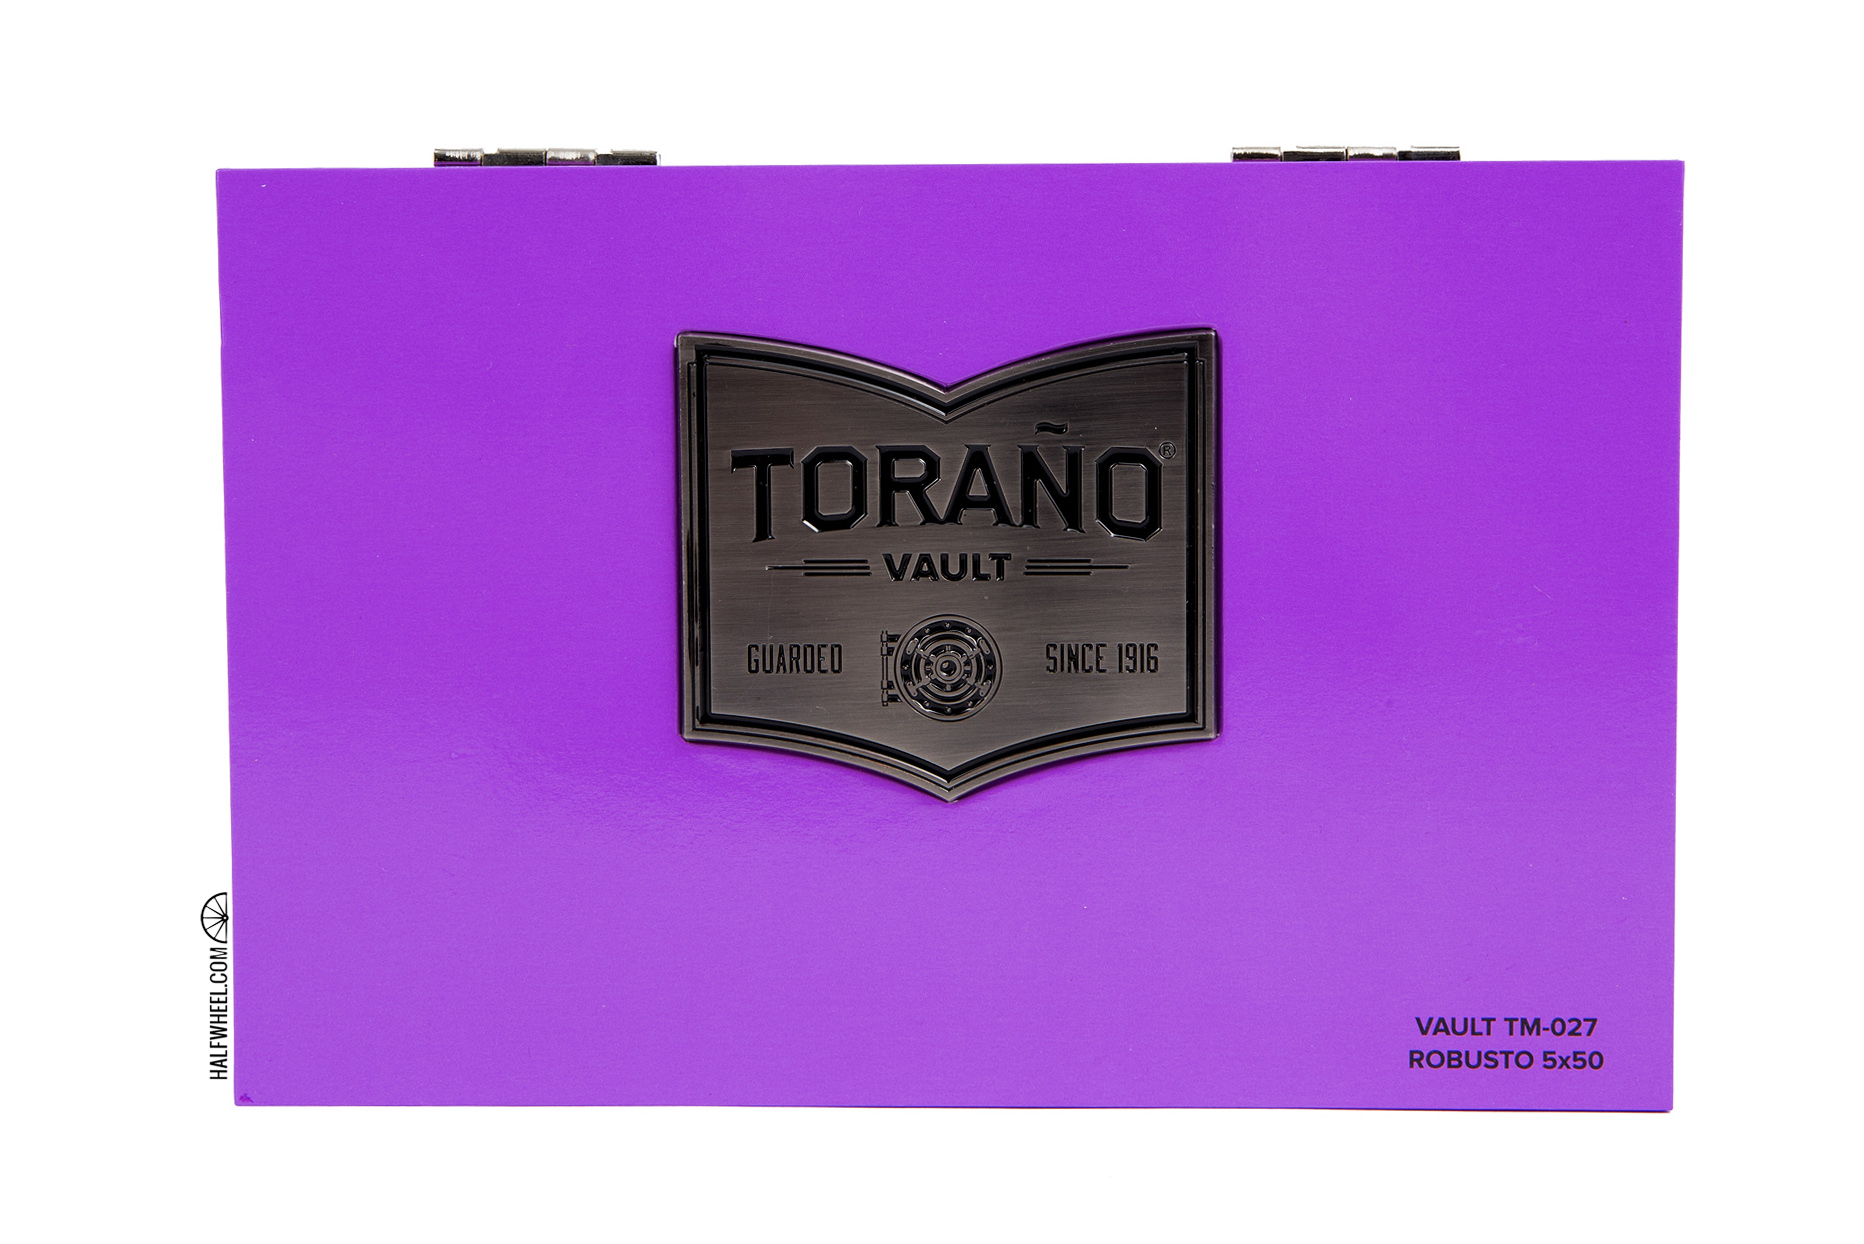 Torano Vault TM-027 Robusto Box 1